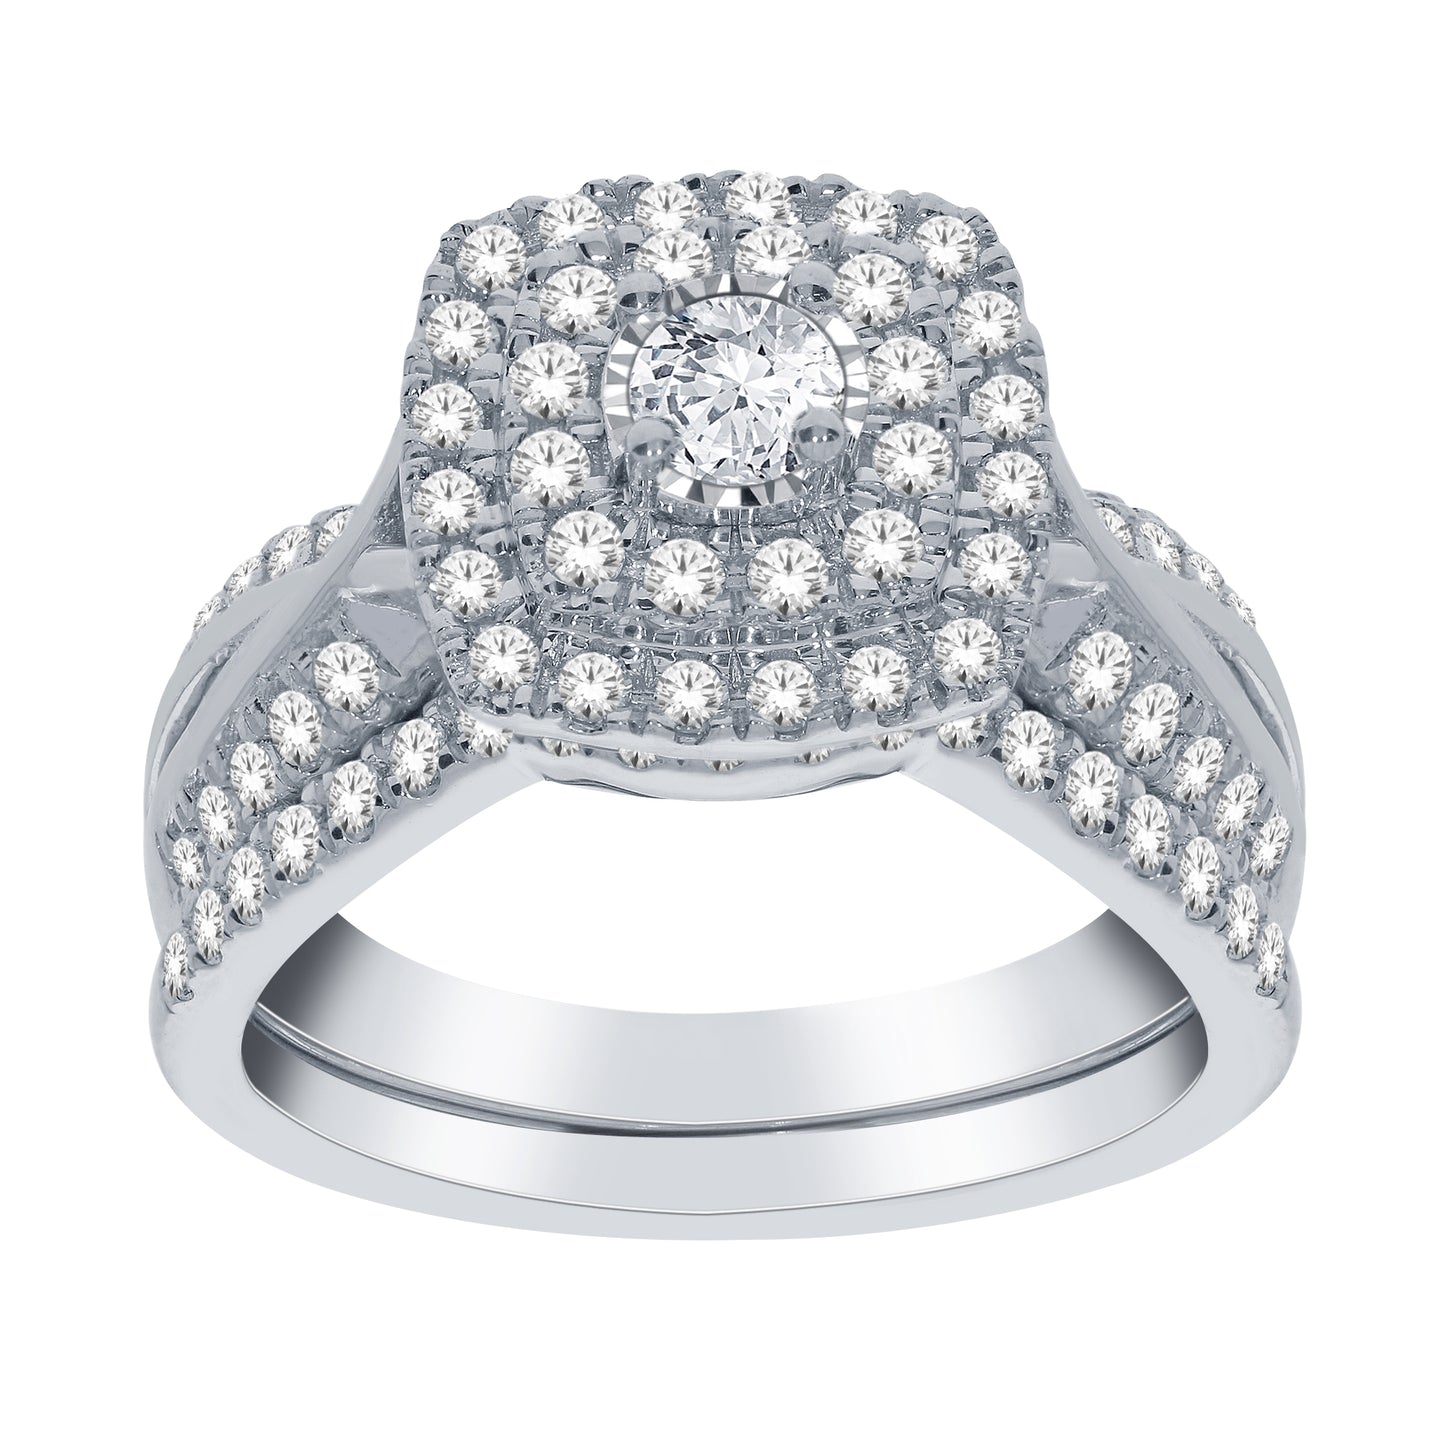 10K White Gold 1 Carat Halo Diamond Bridal Engagement Ring set